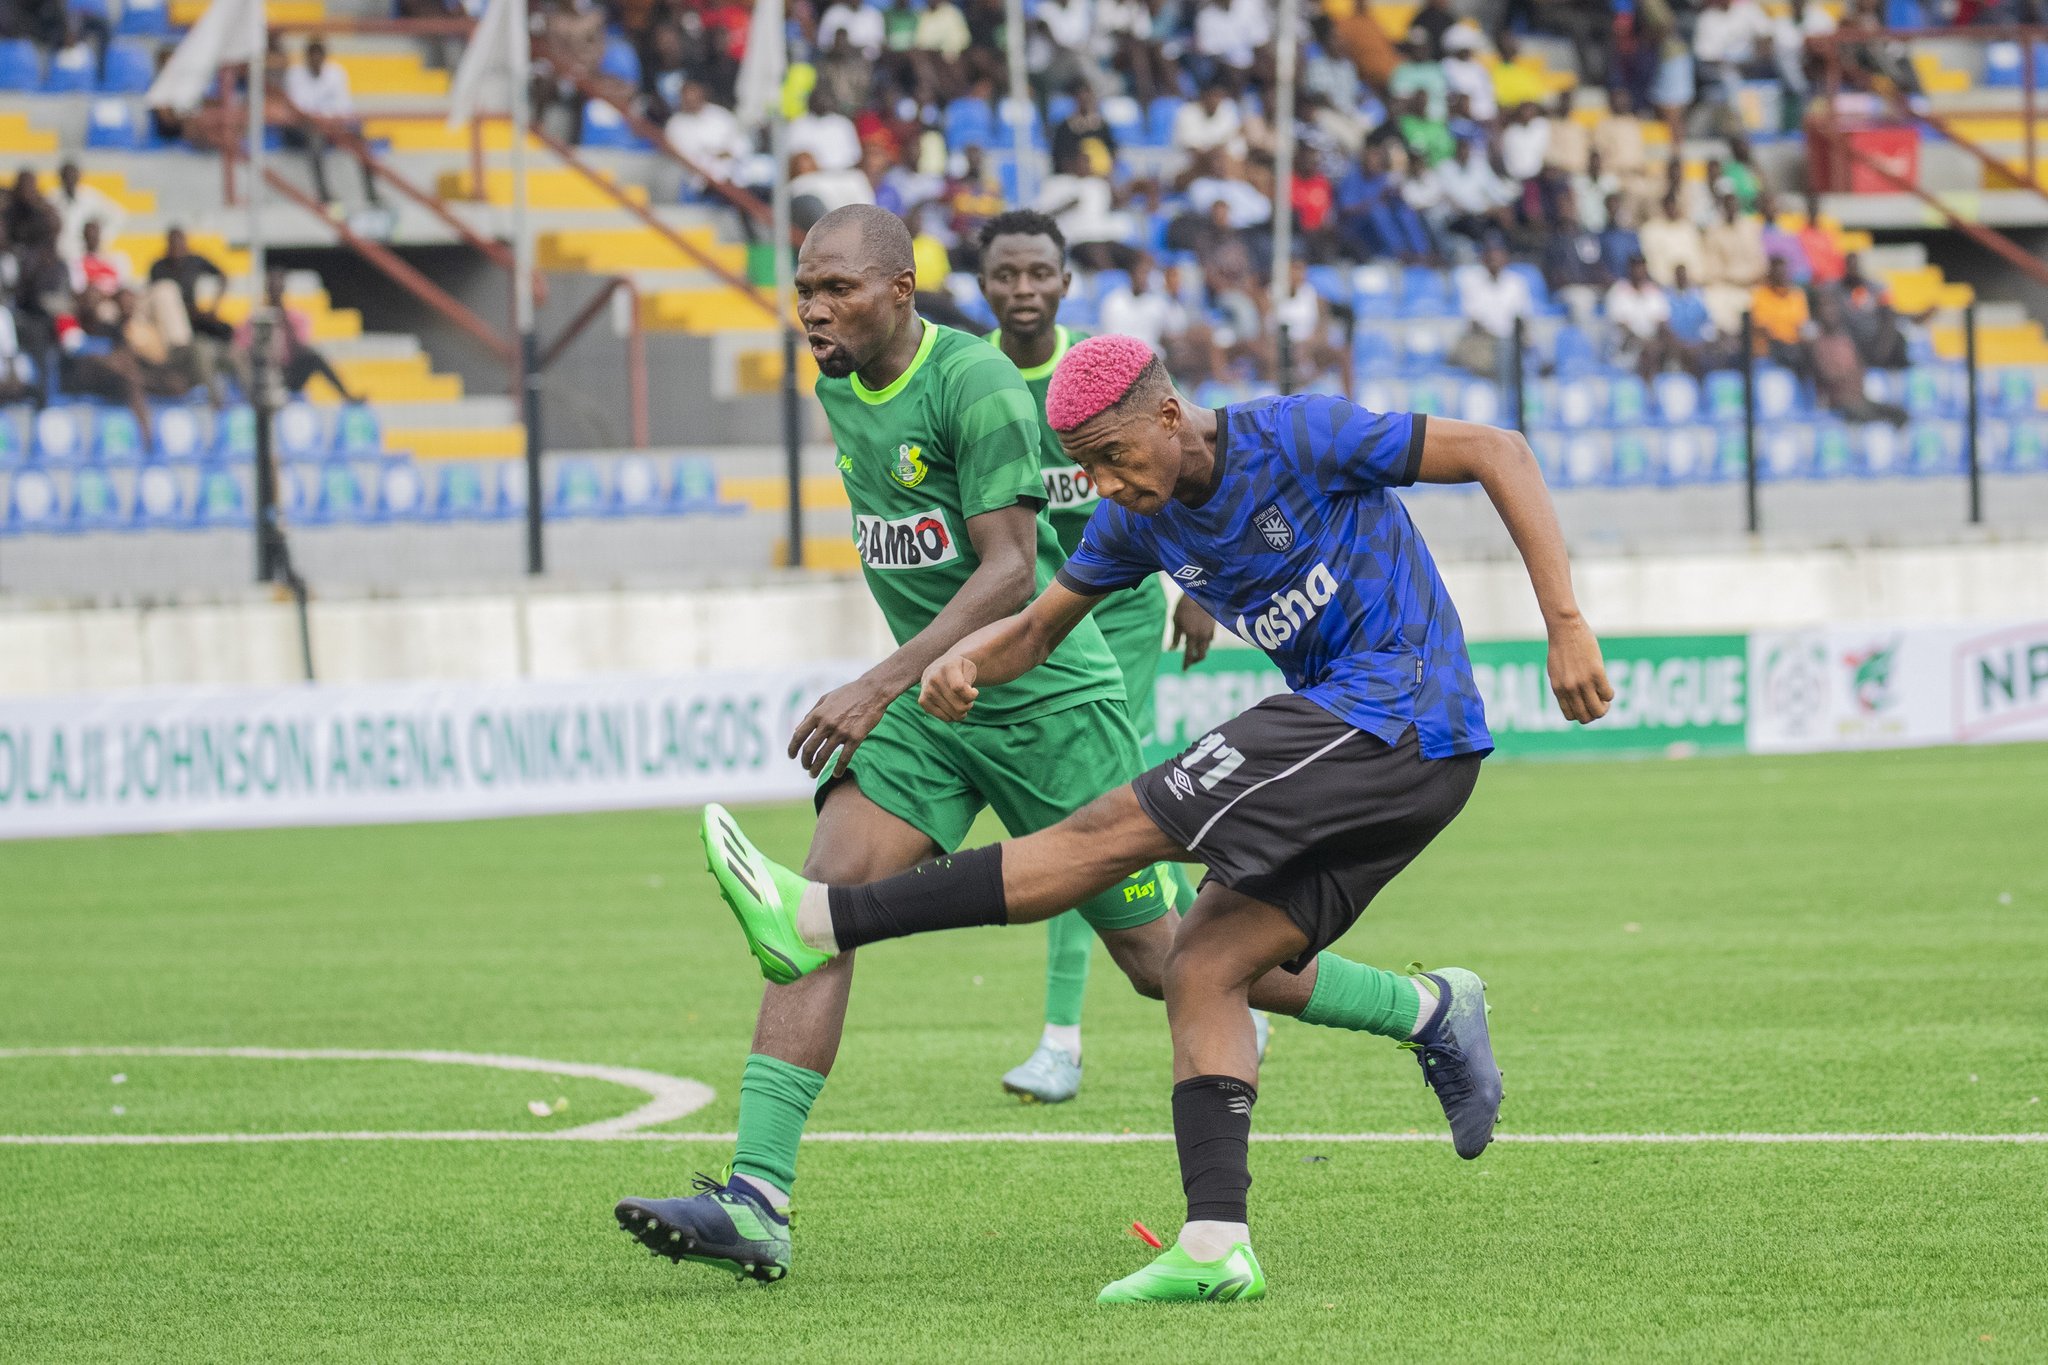 NPFL: Jonathan Alukwu’s late aim secures 1-1 draw for Sporting Lagos towards Heartland